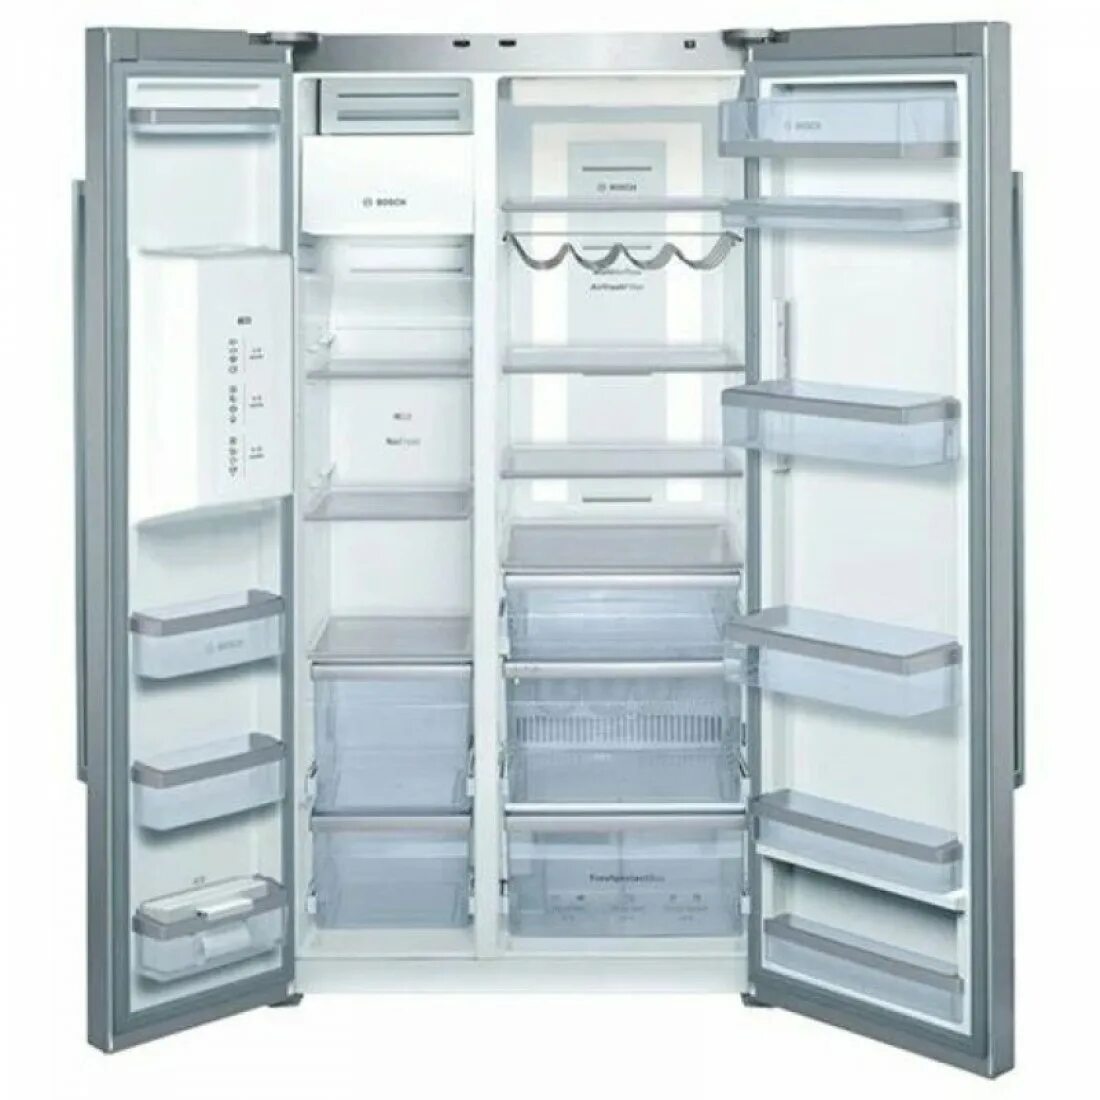 Холодильник Bosch kad62p91. Холодильник Bosch Side by Side. Холодильник Bosch kan58a50. Bosch Multi Air Flow холодильник. Купить холодильник тагил